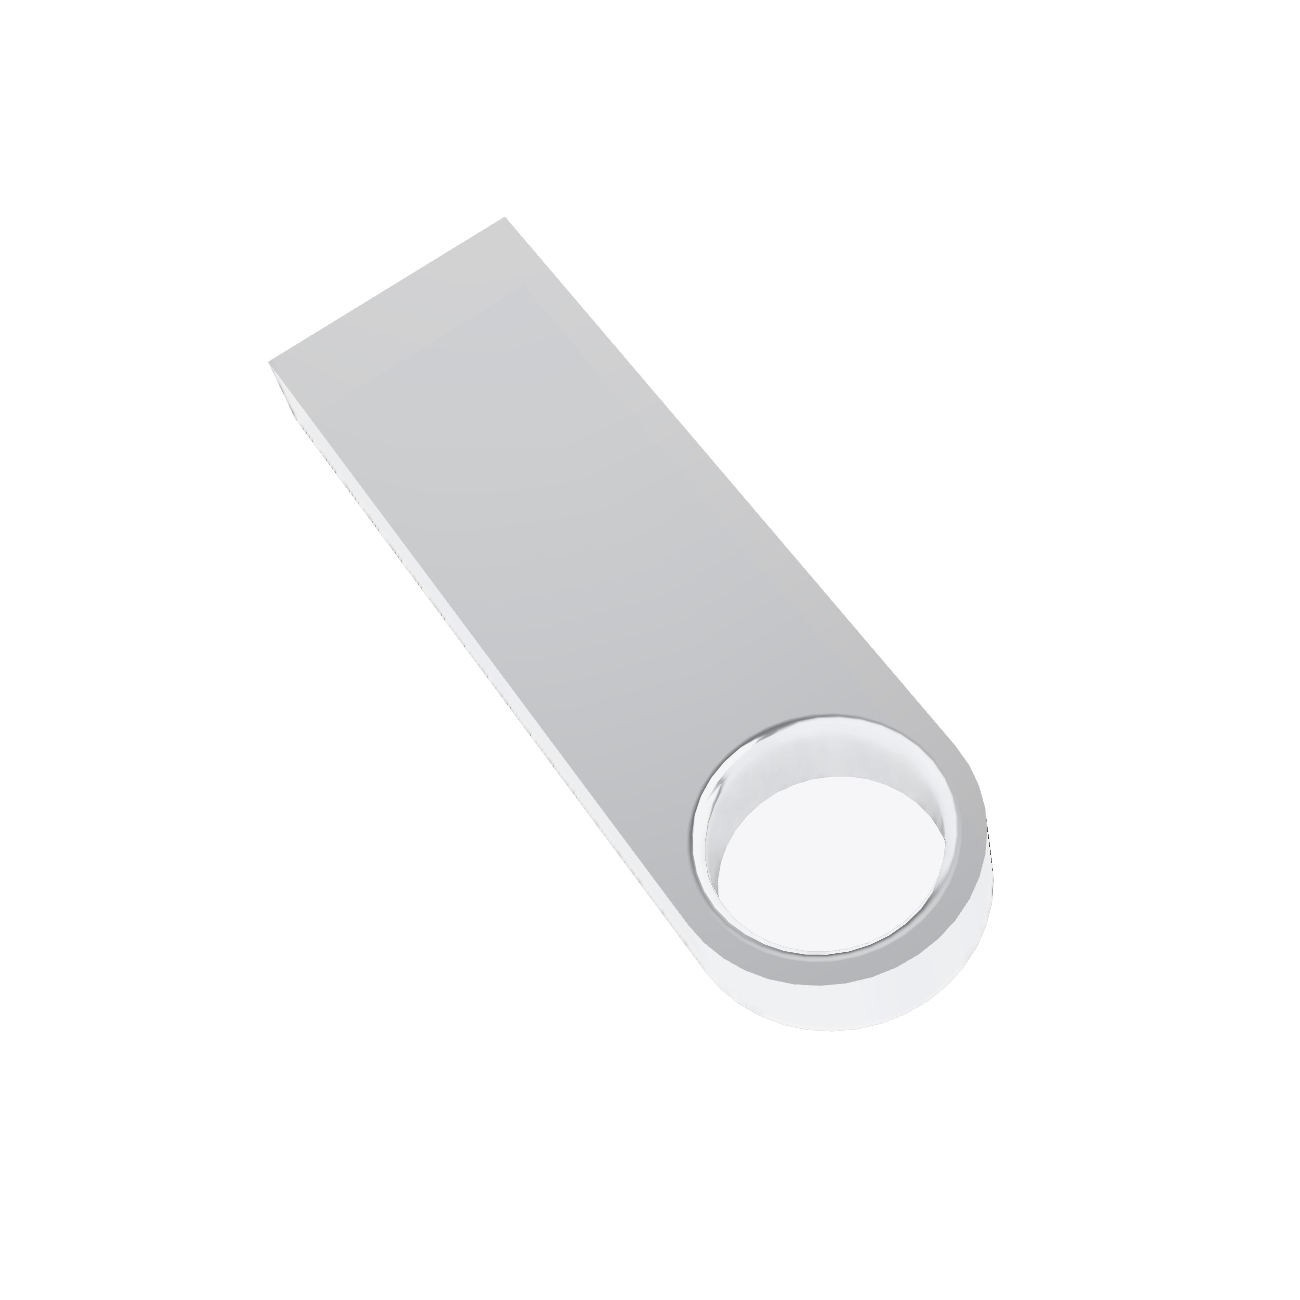 ® GB) GERMANY SE09 USB-Stick (Silber, 64 USB